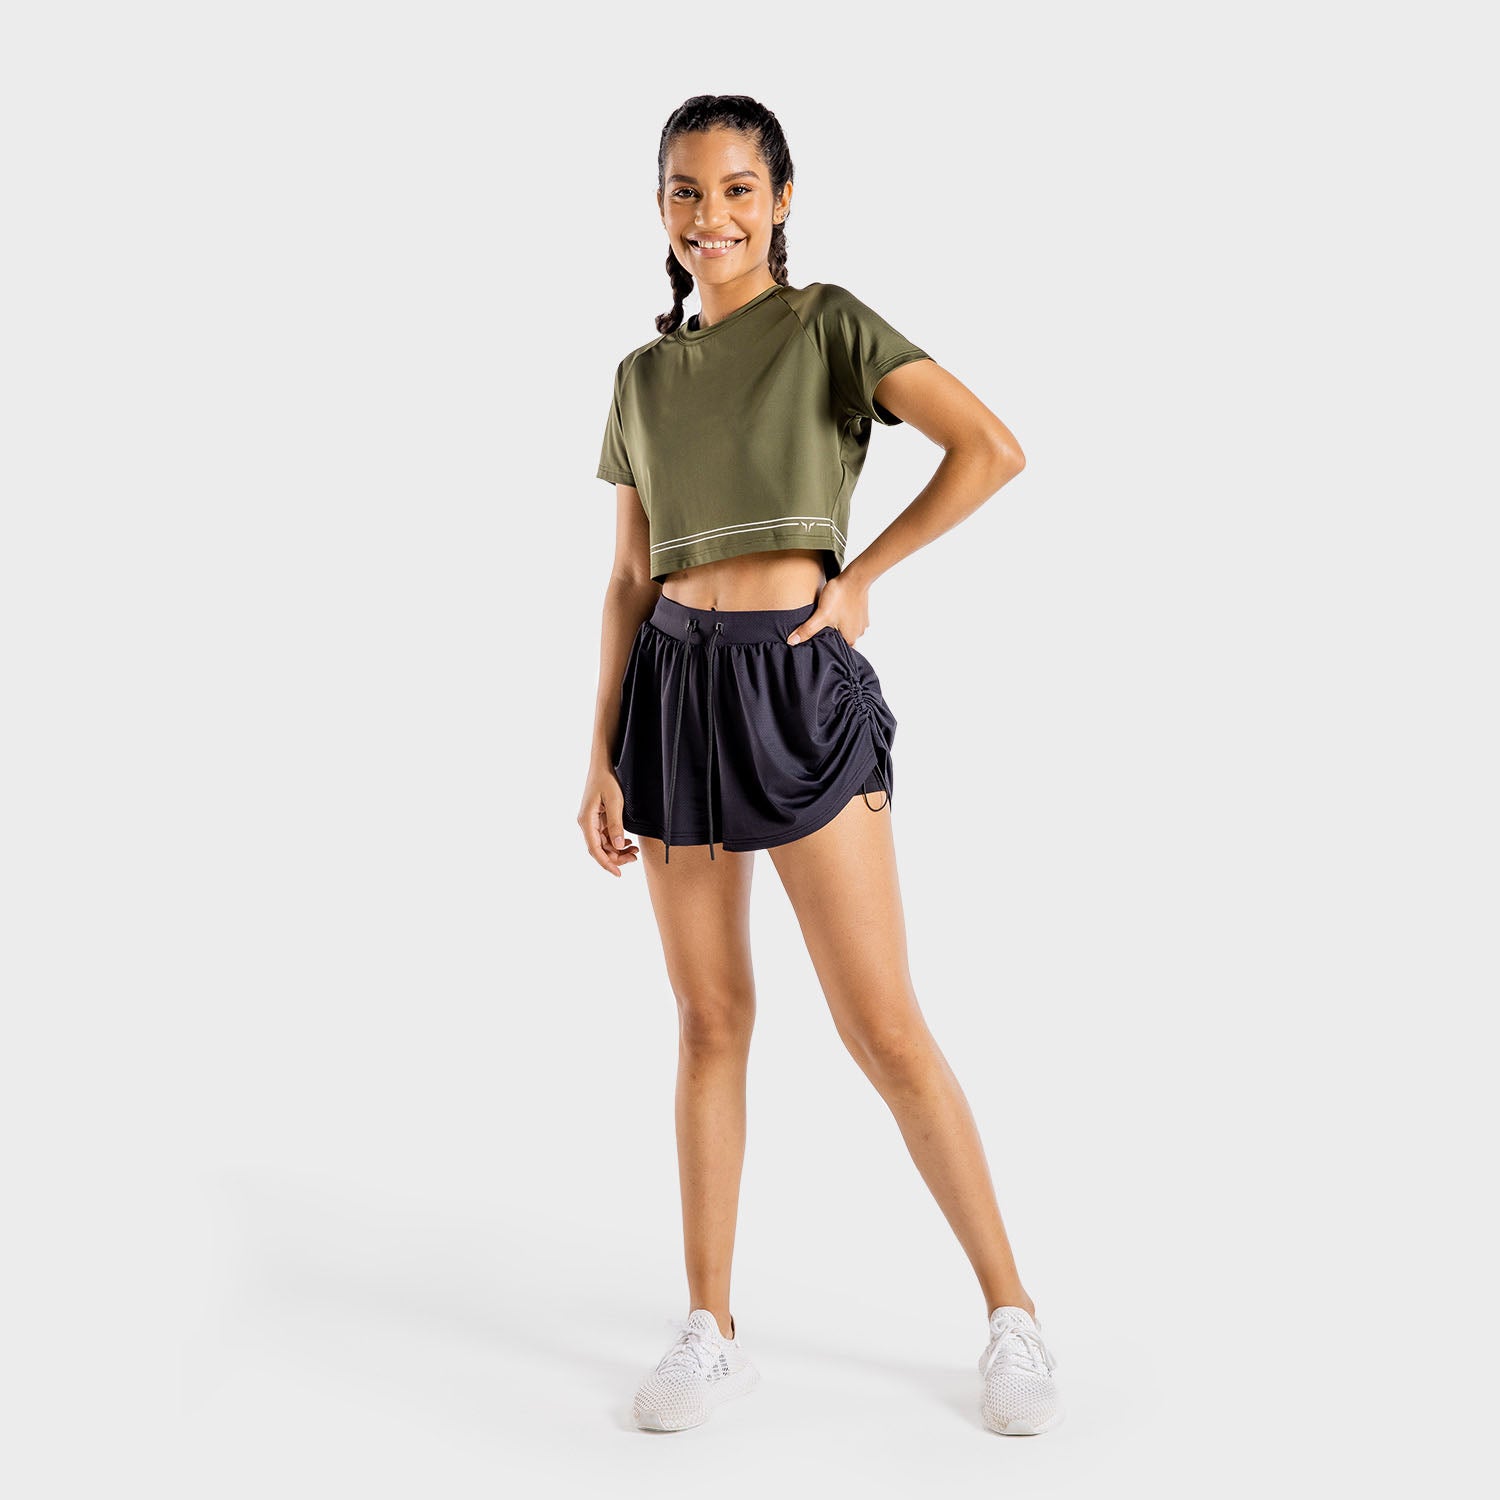 squatwolf-gym-t-shirts-for-women-flux-crop-tee-khaki-workout-clothes